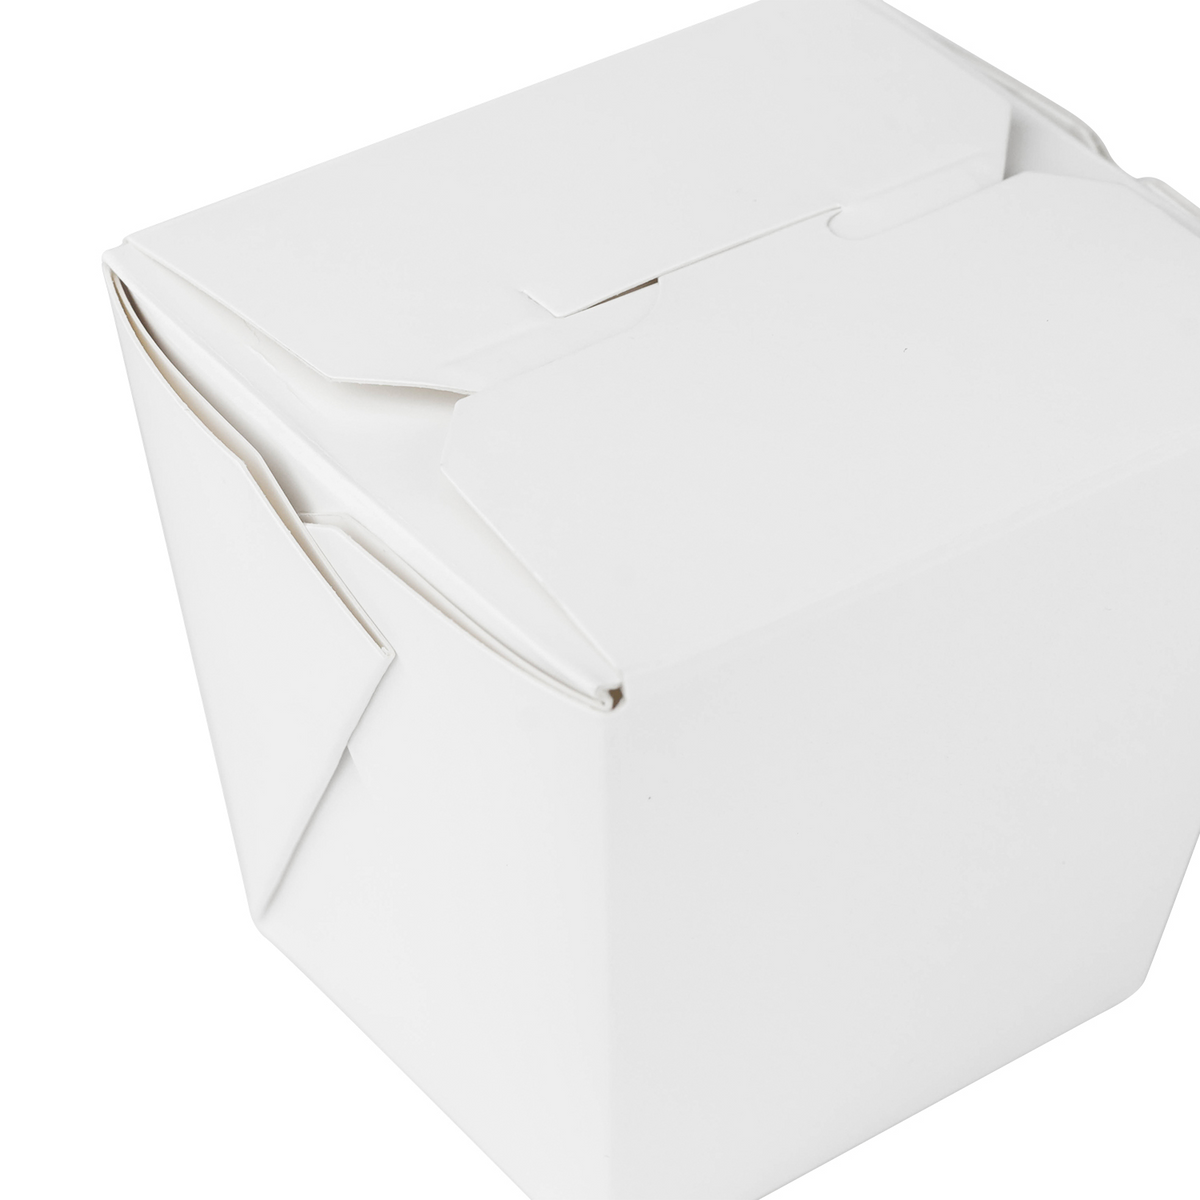 Karat 10oz Food Containers (96mm), White - 1,000 pcs